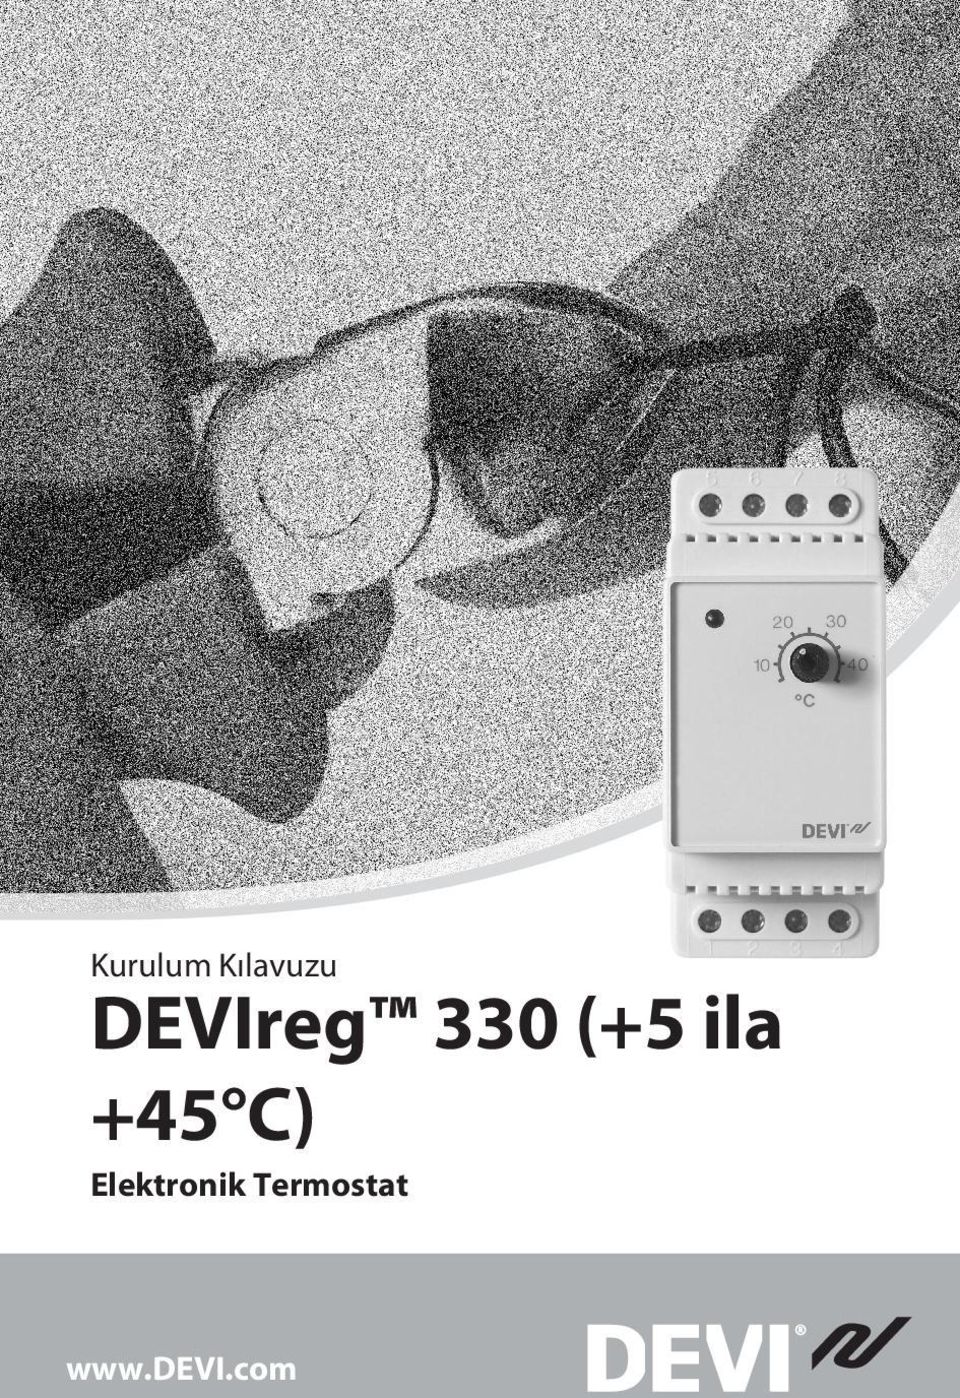 +45 C) Elektronik